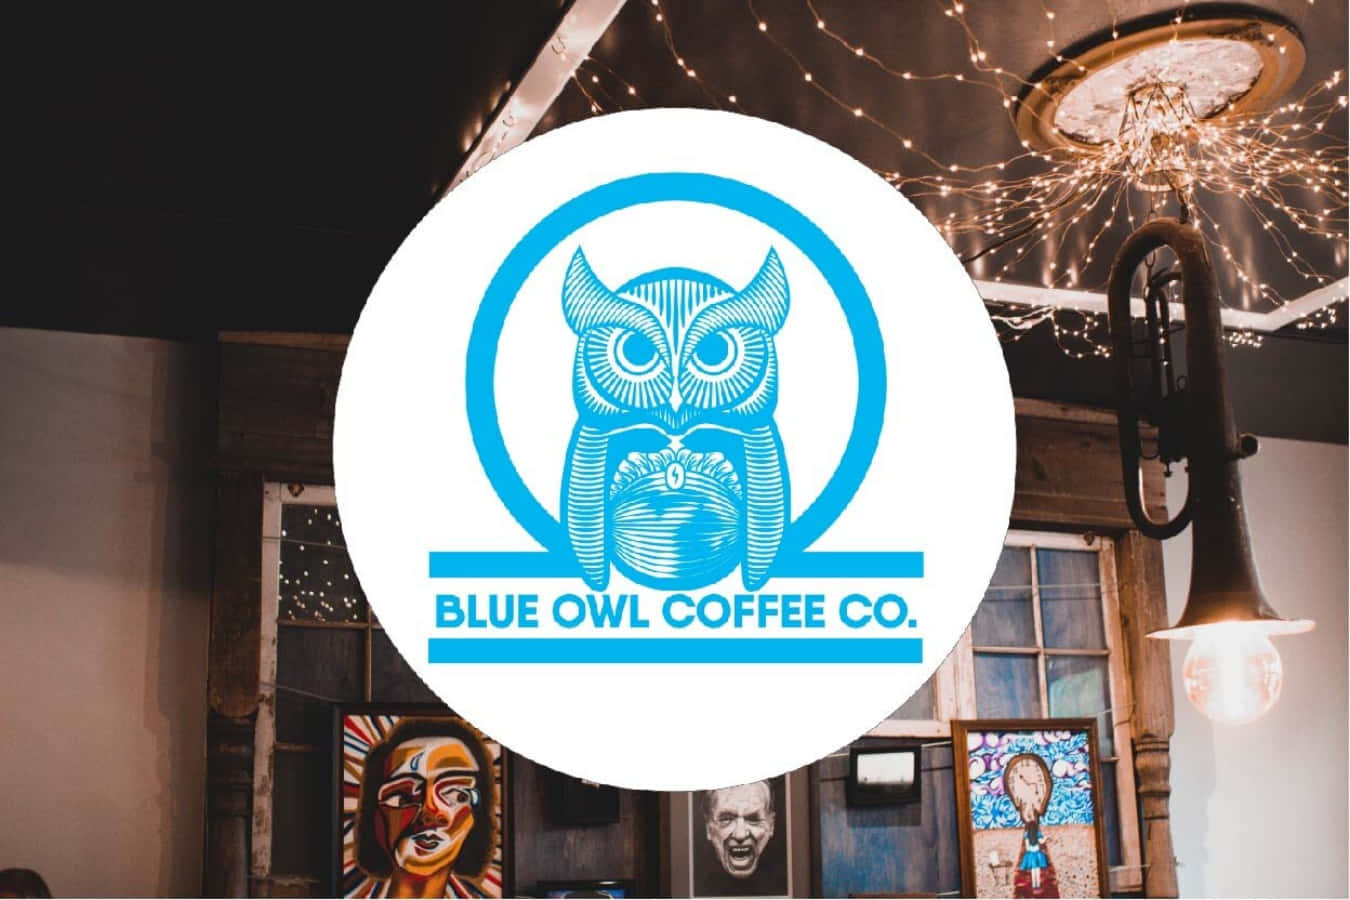 Blue Owl Coffee Co